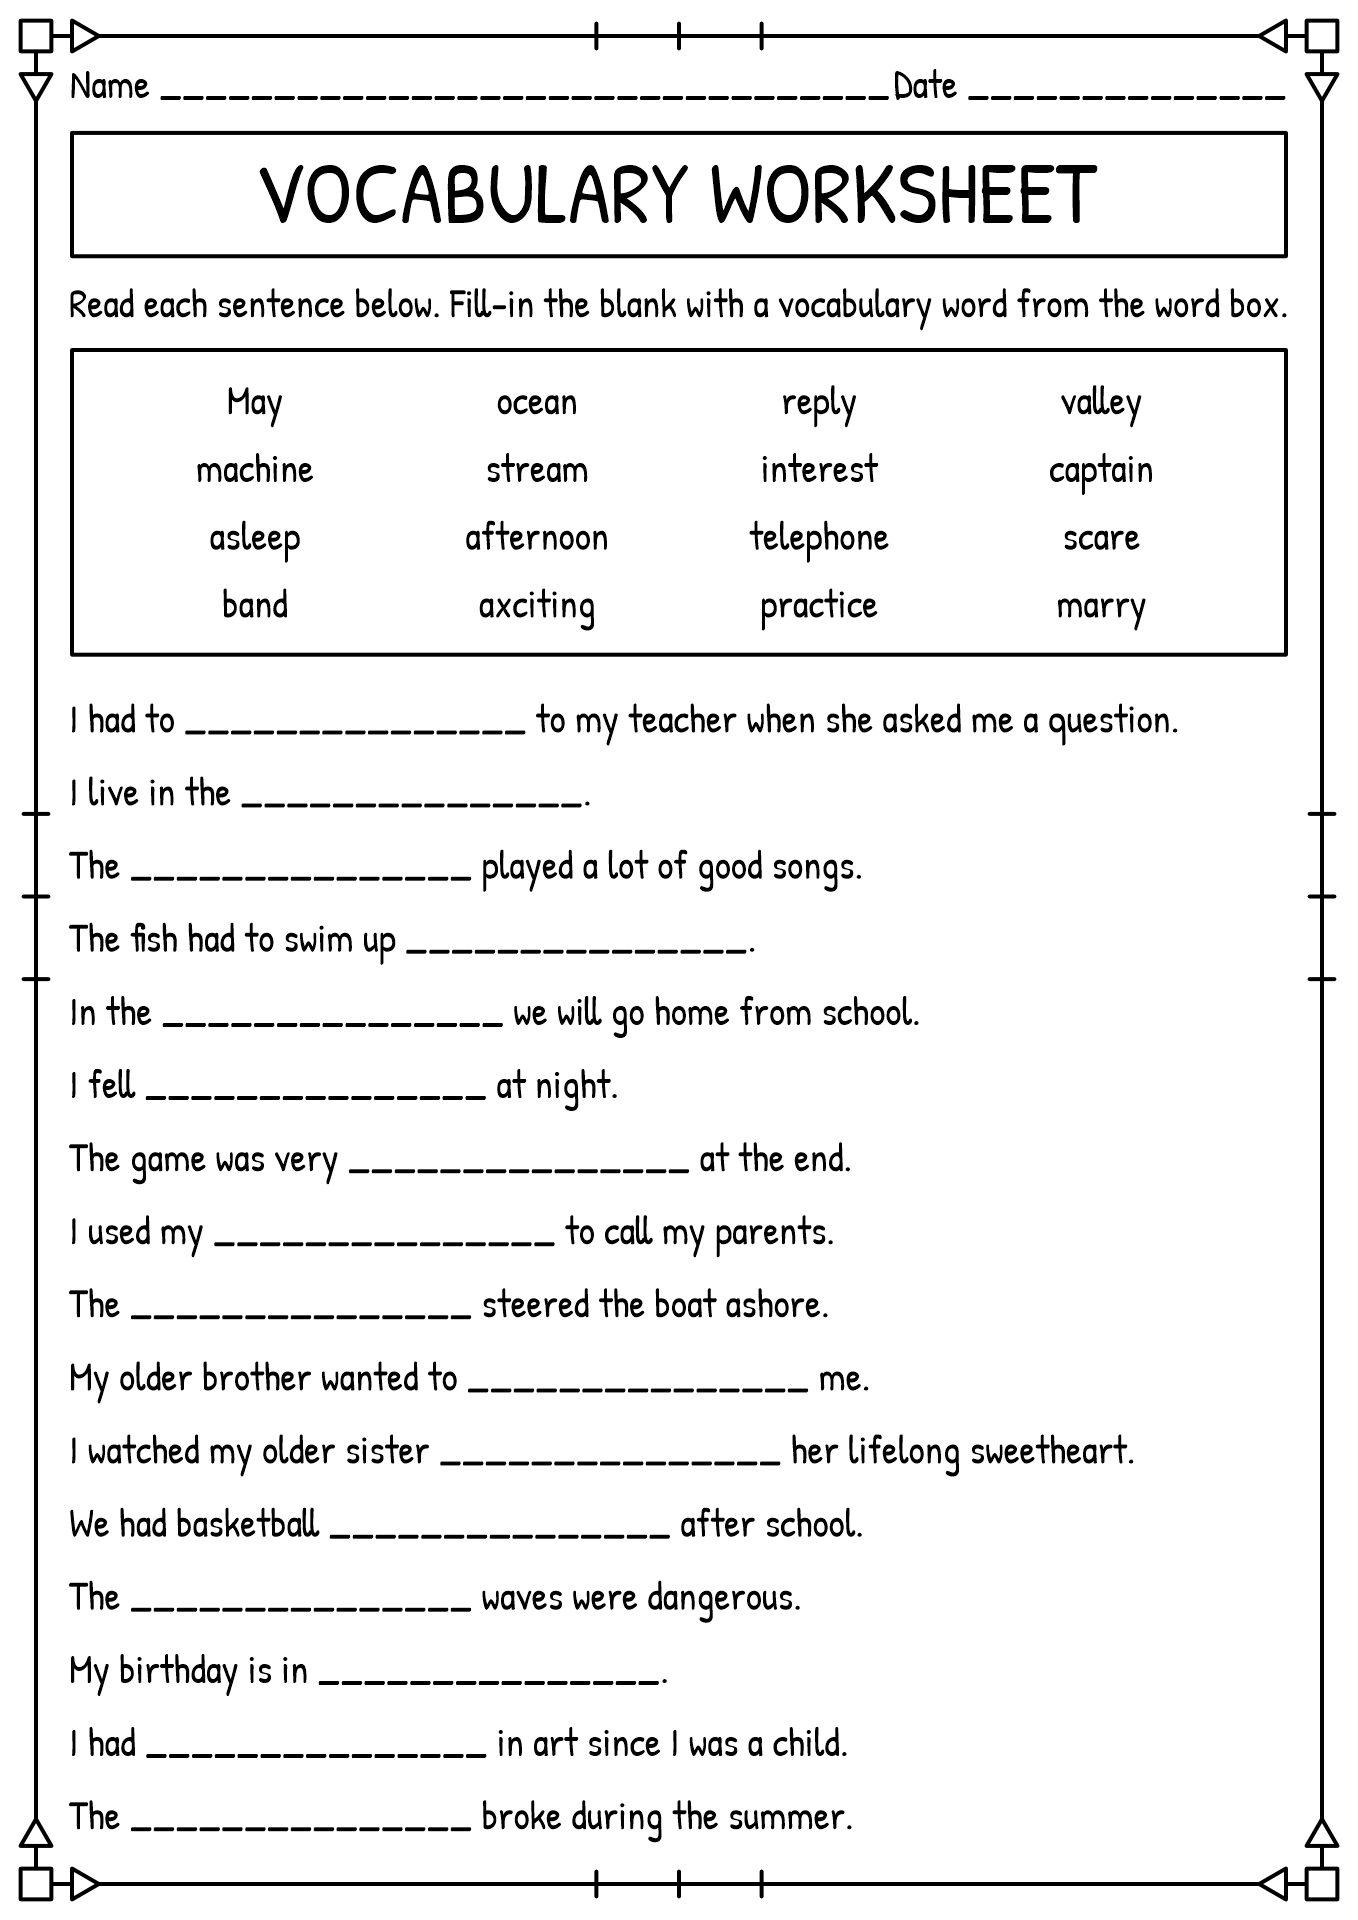 Third Grade Vocabulary Test Image